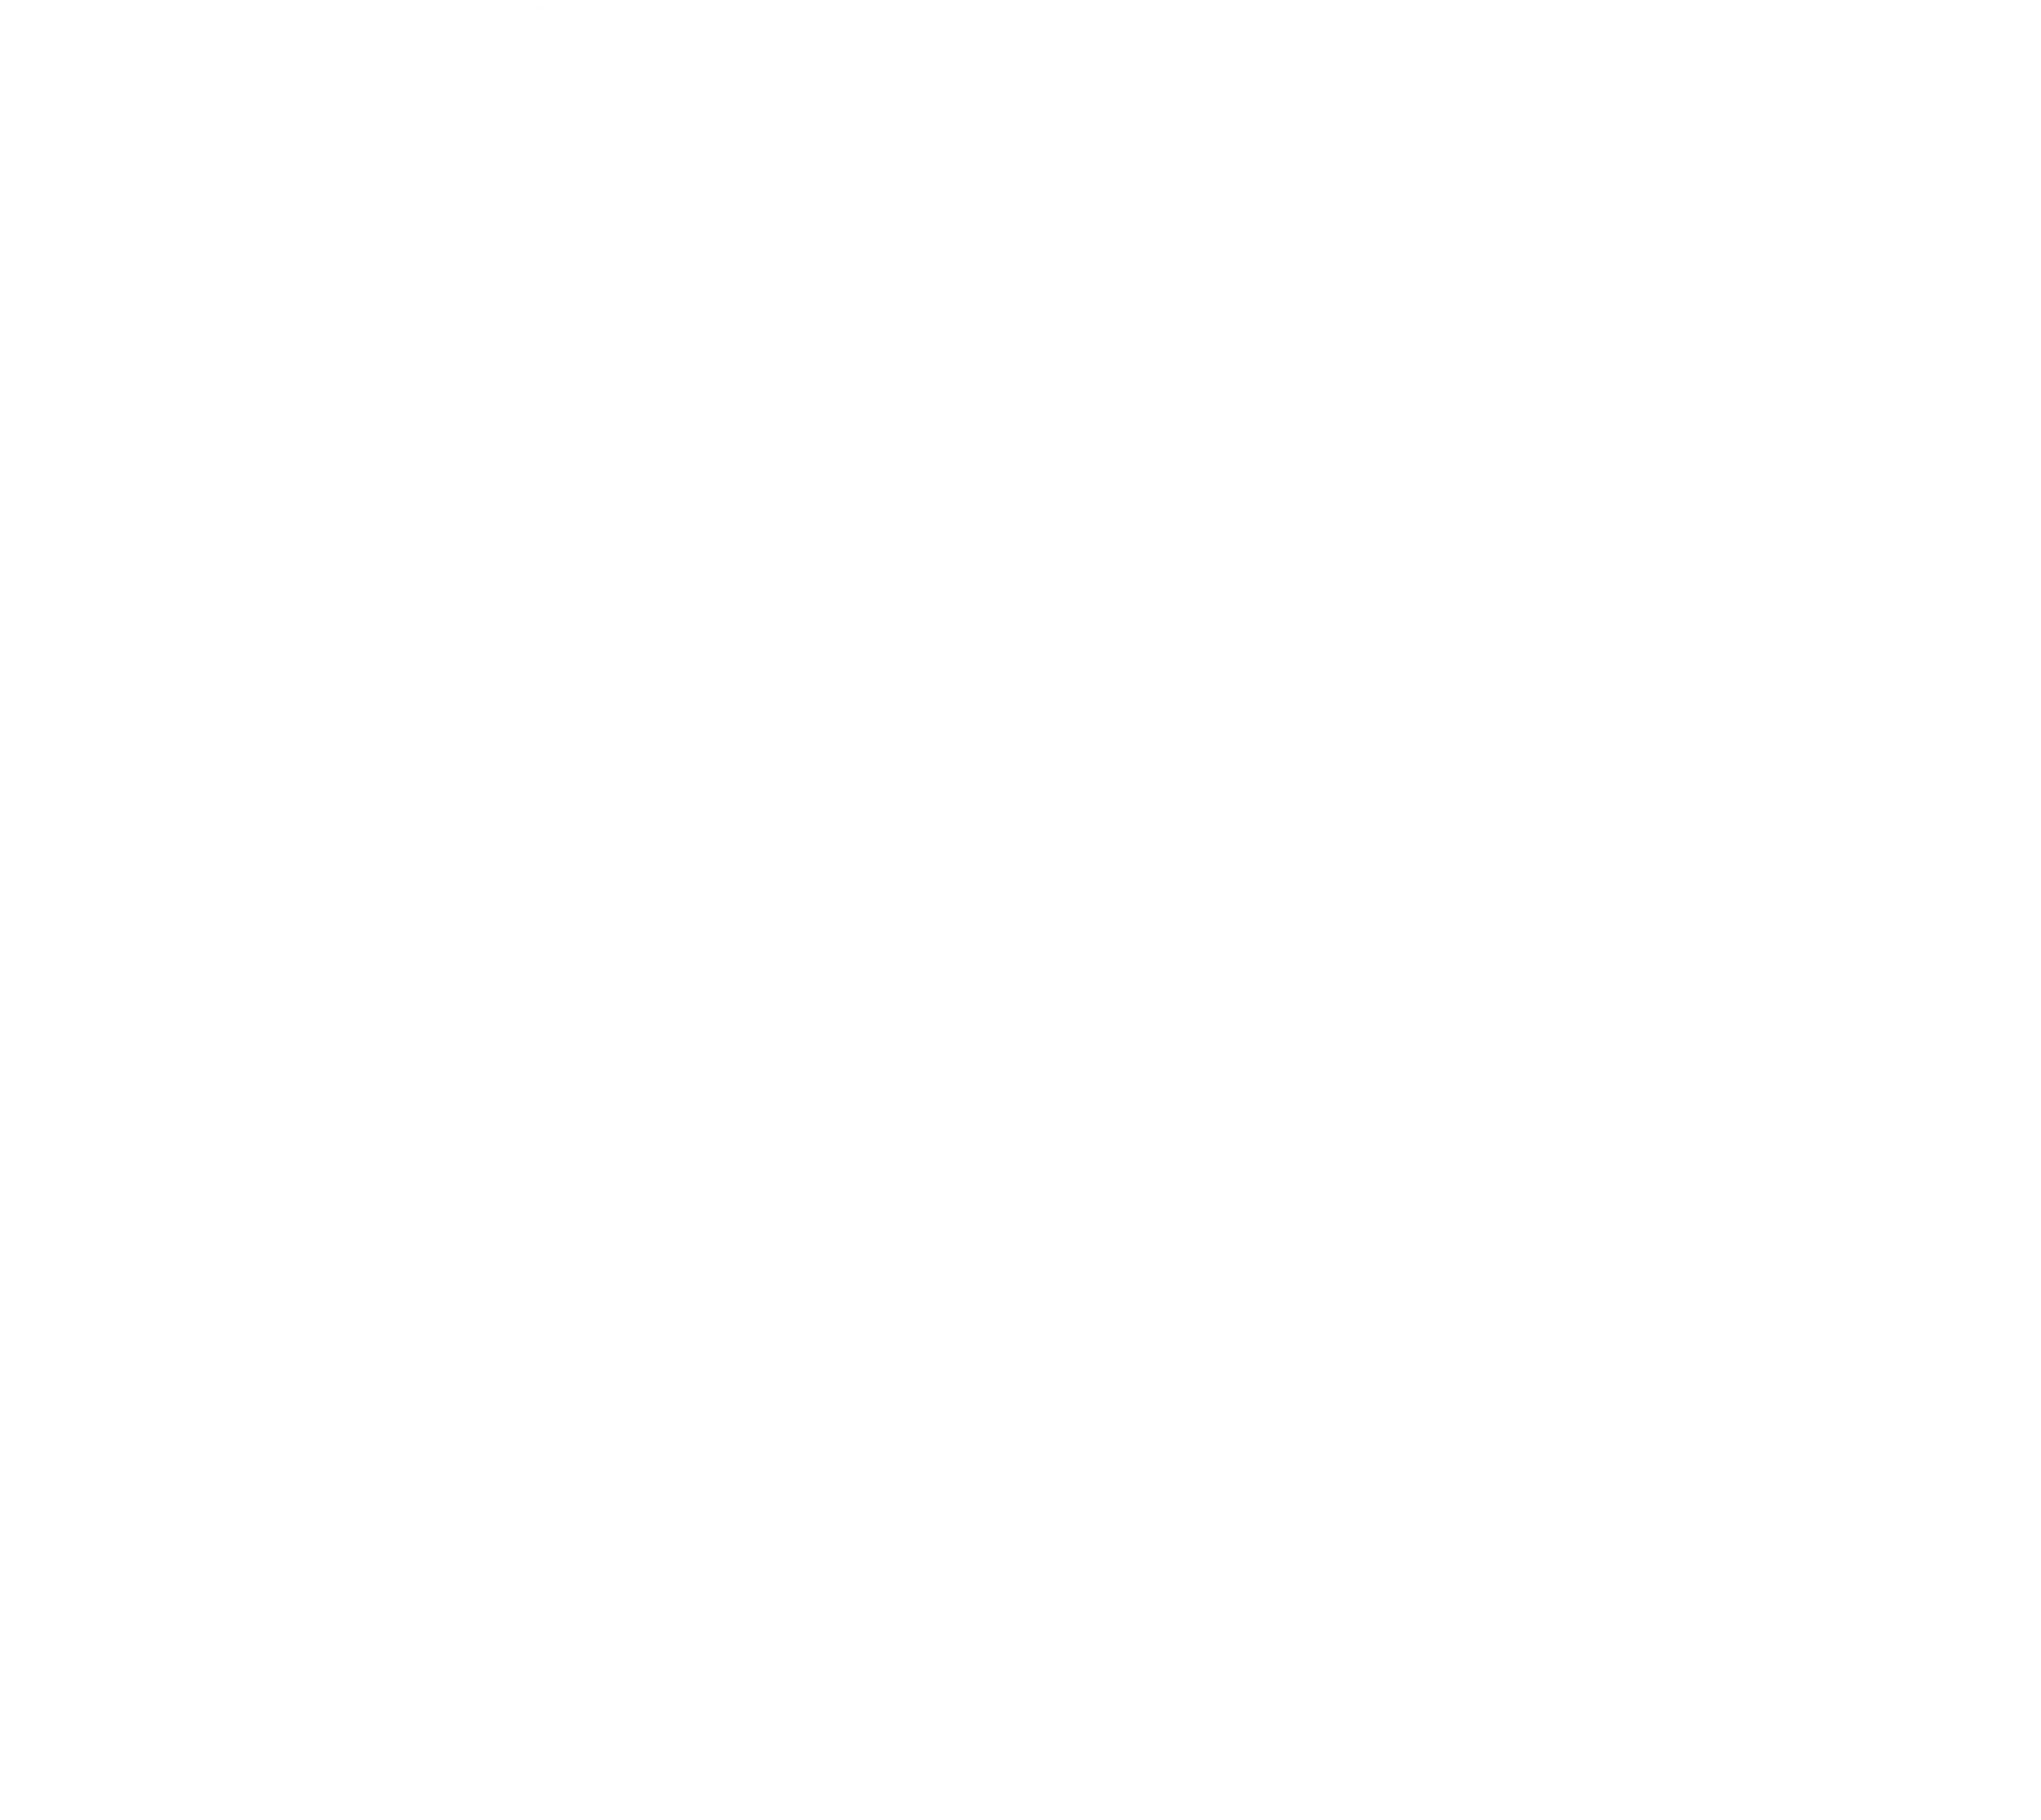 react-native-firebase-1-logo-black-and-white.webp